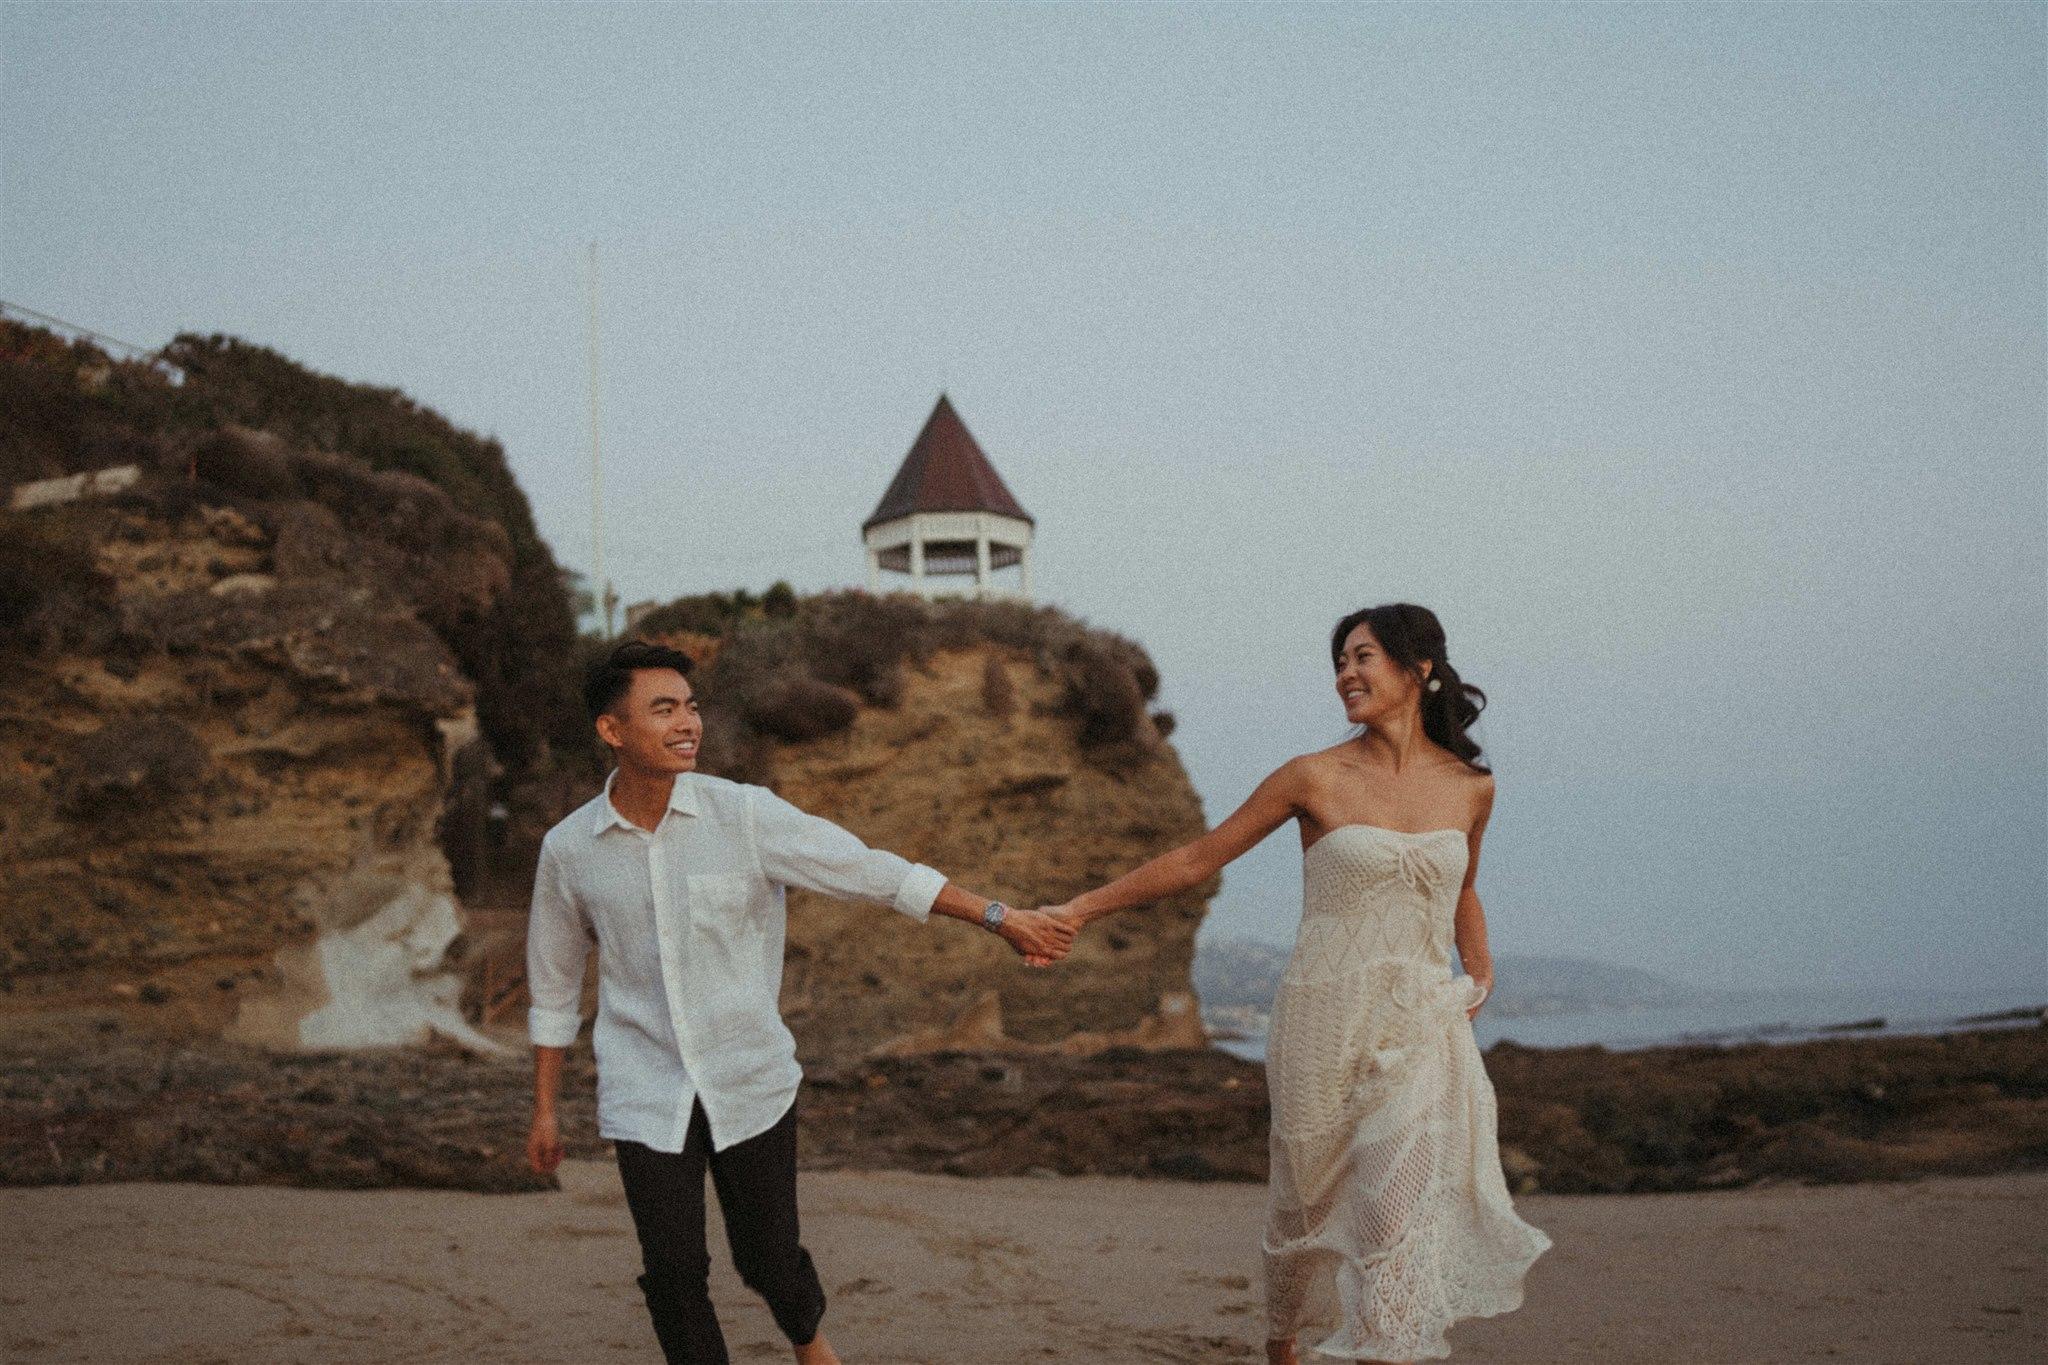 The Wedding Website of Jeffrey Yuen and Michelle Kim